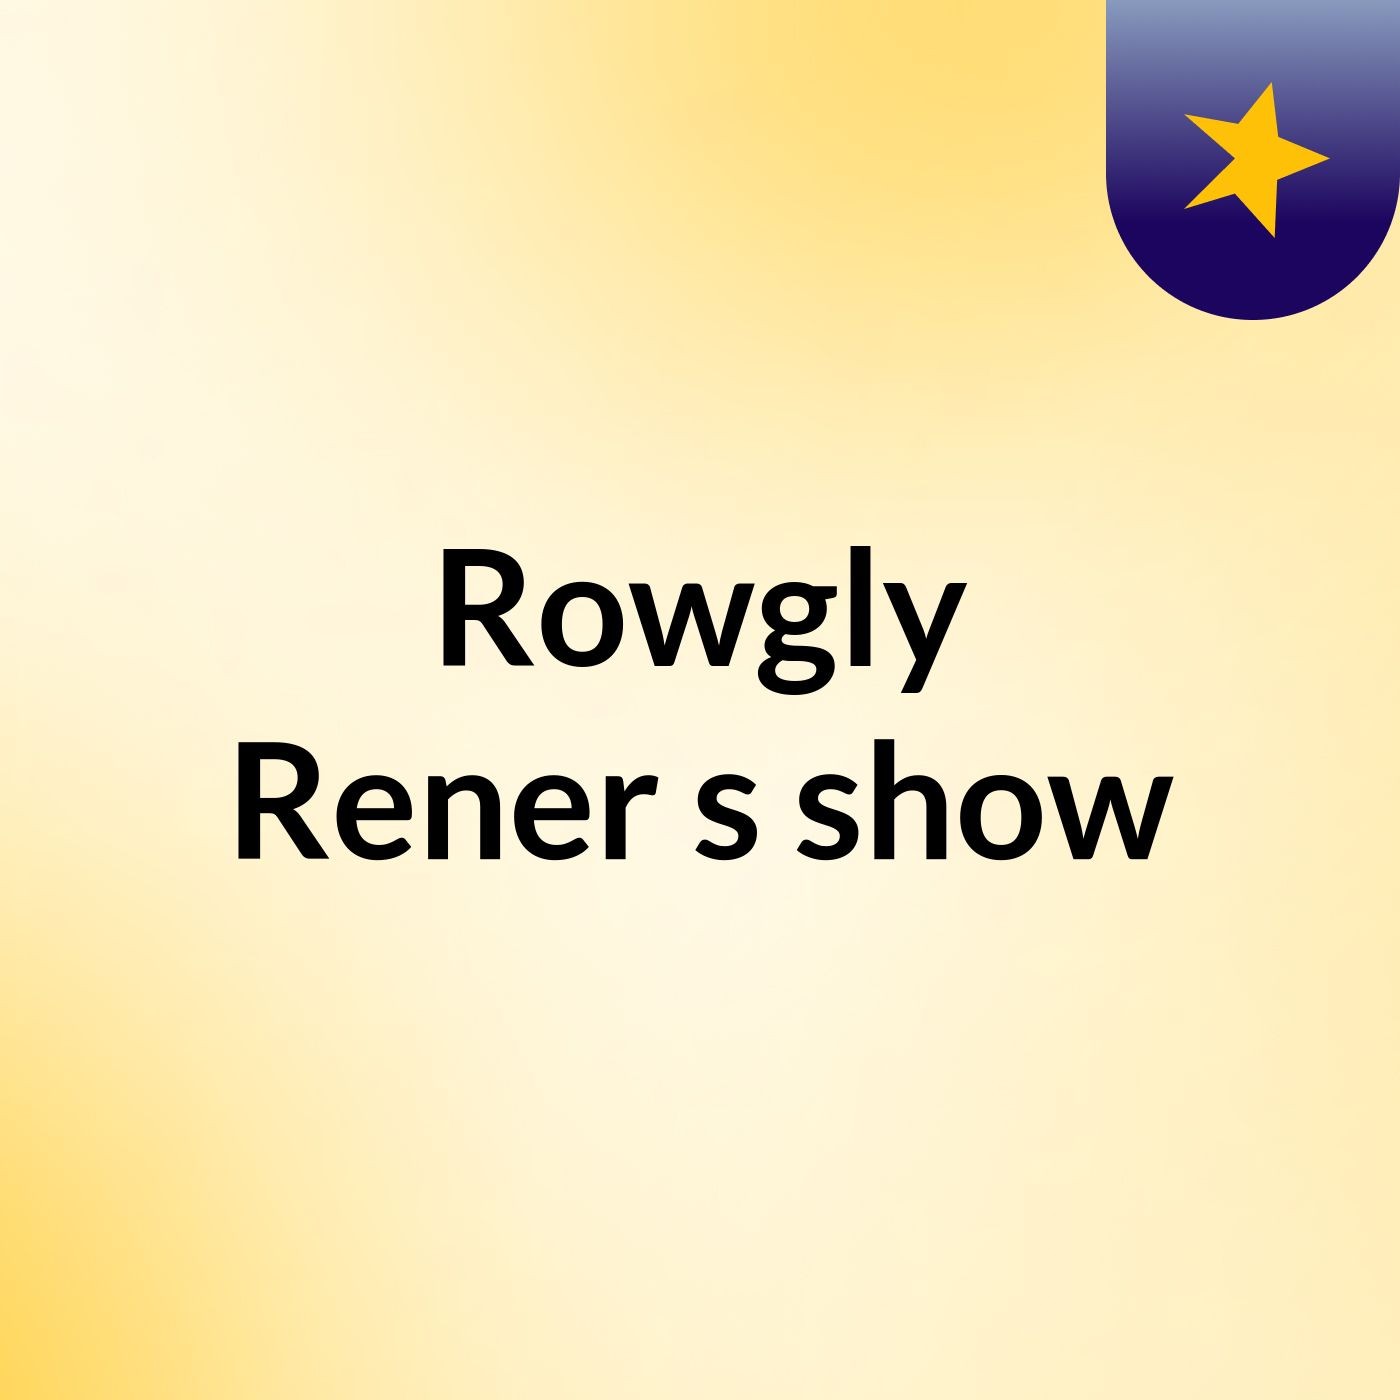 Rowgly Rener's show